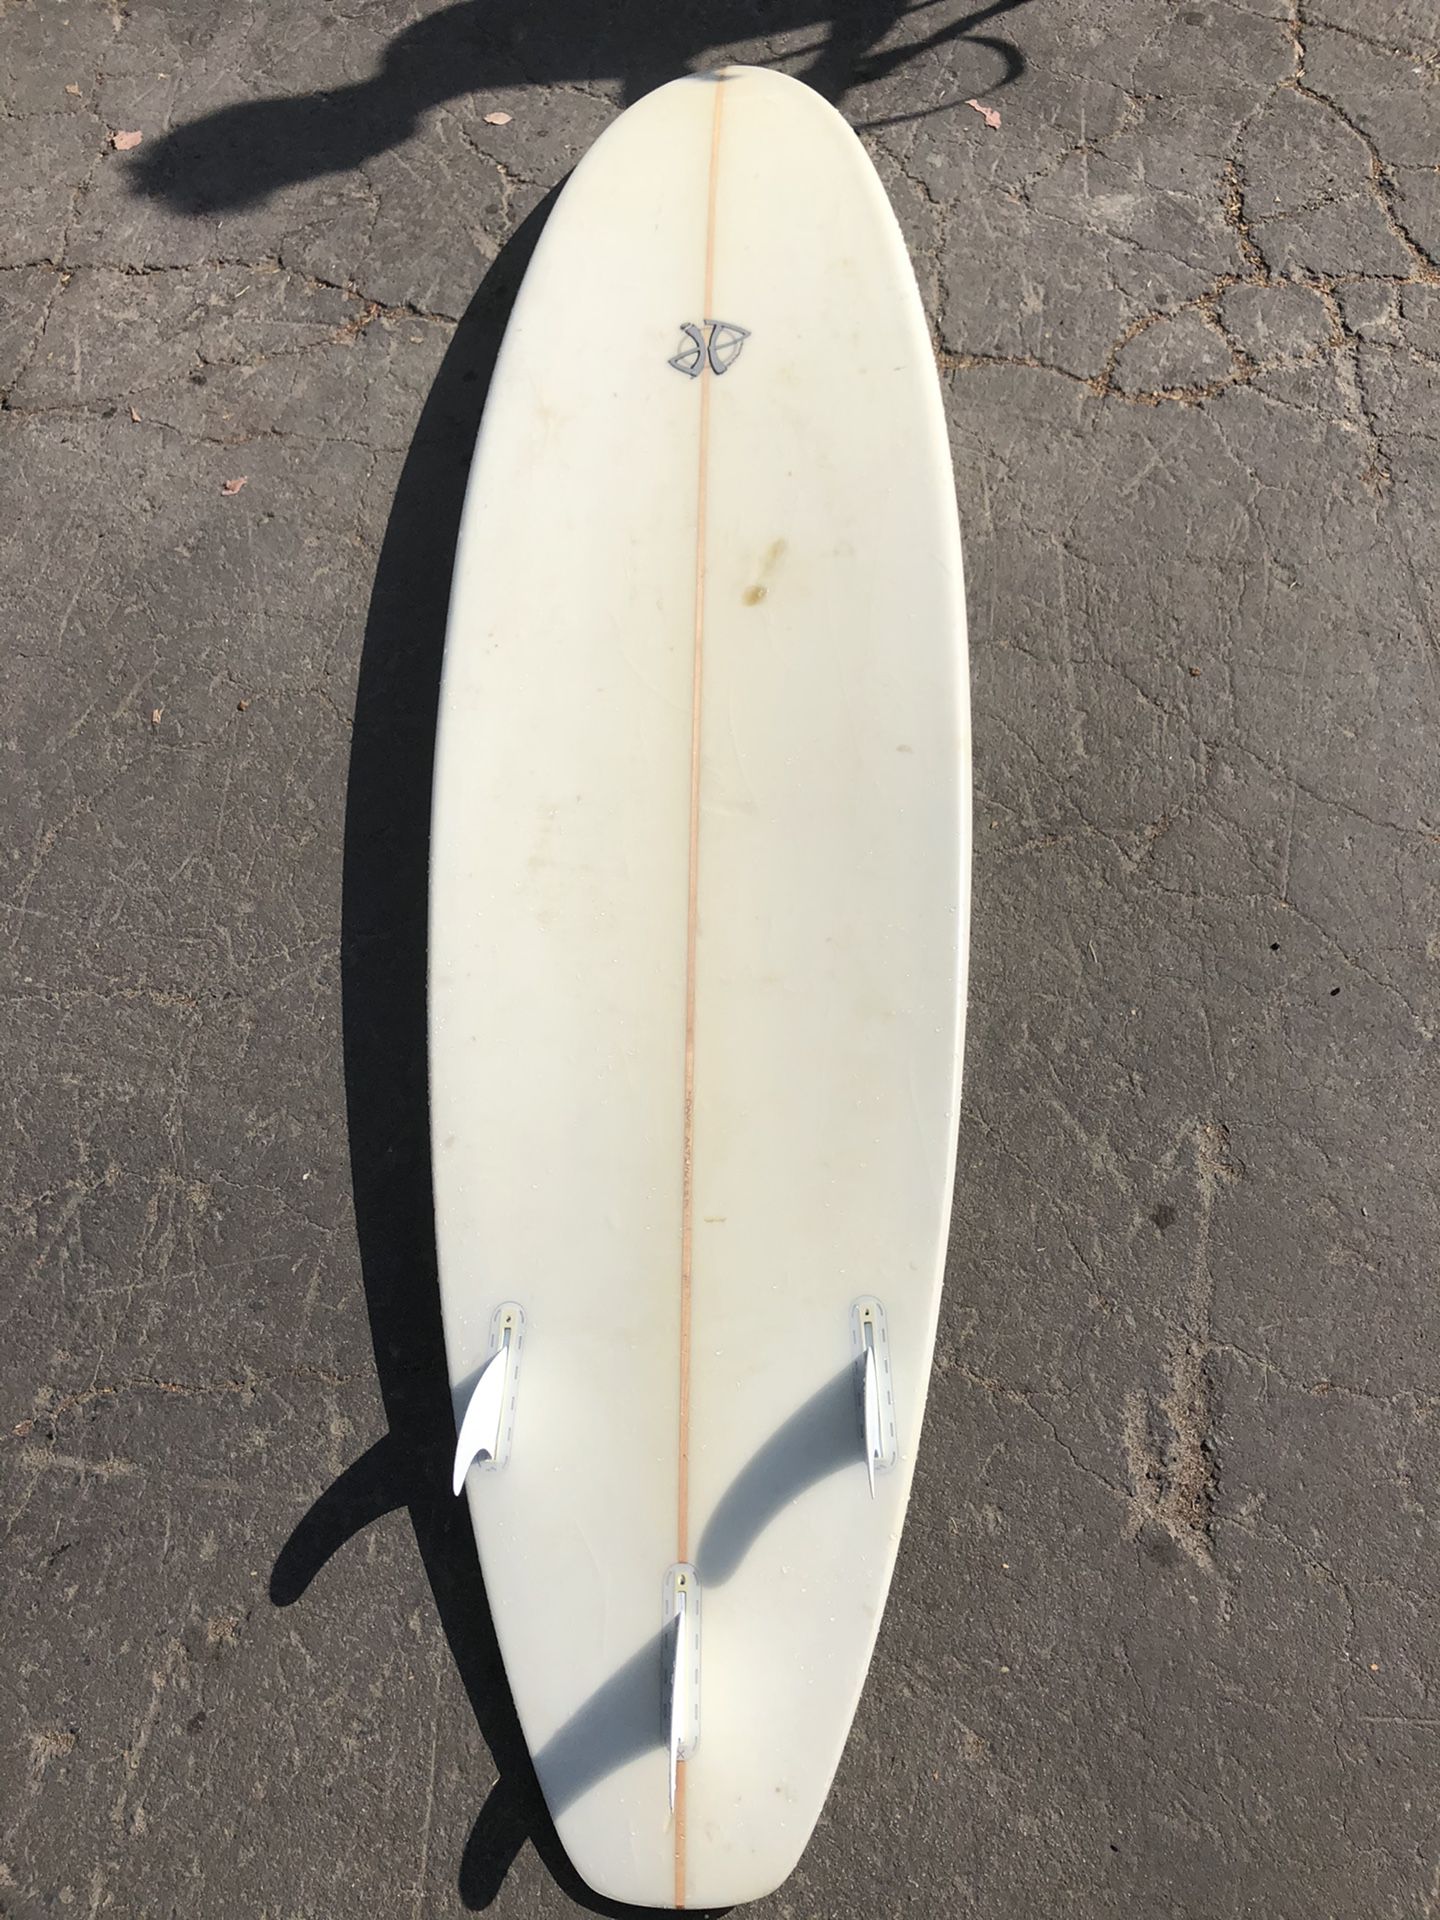 8’ Surfboard!!